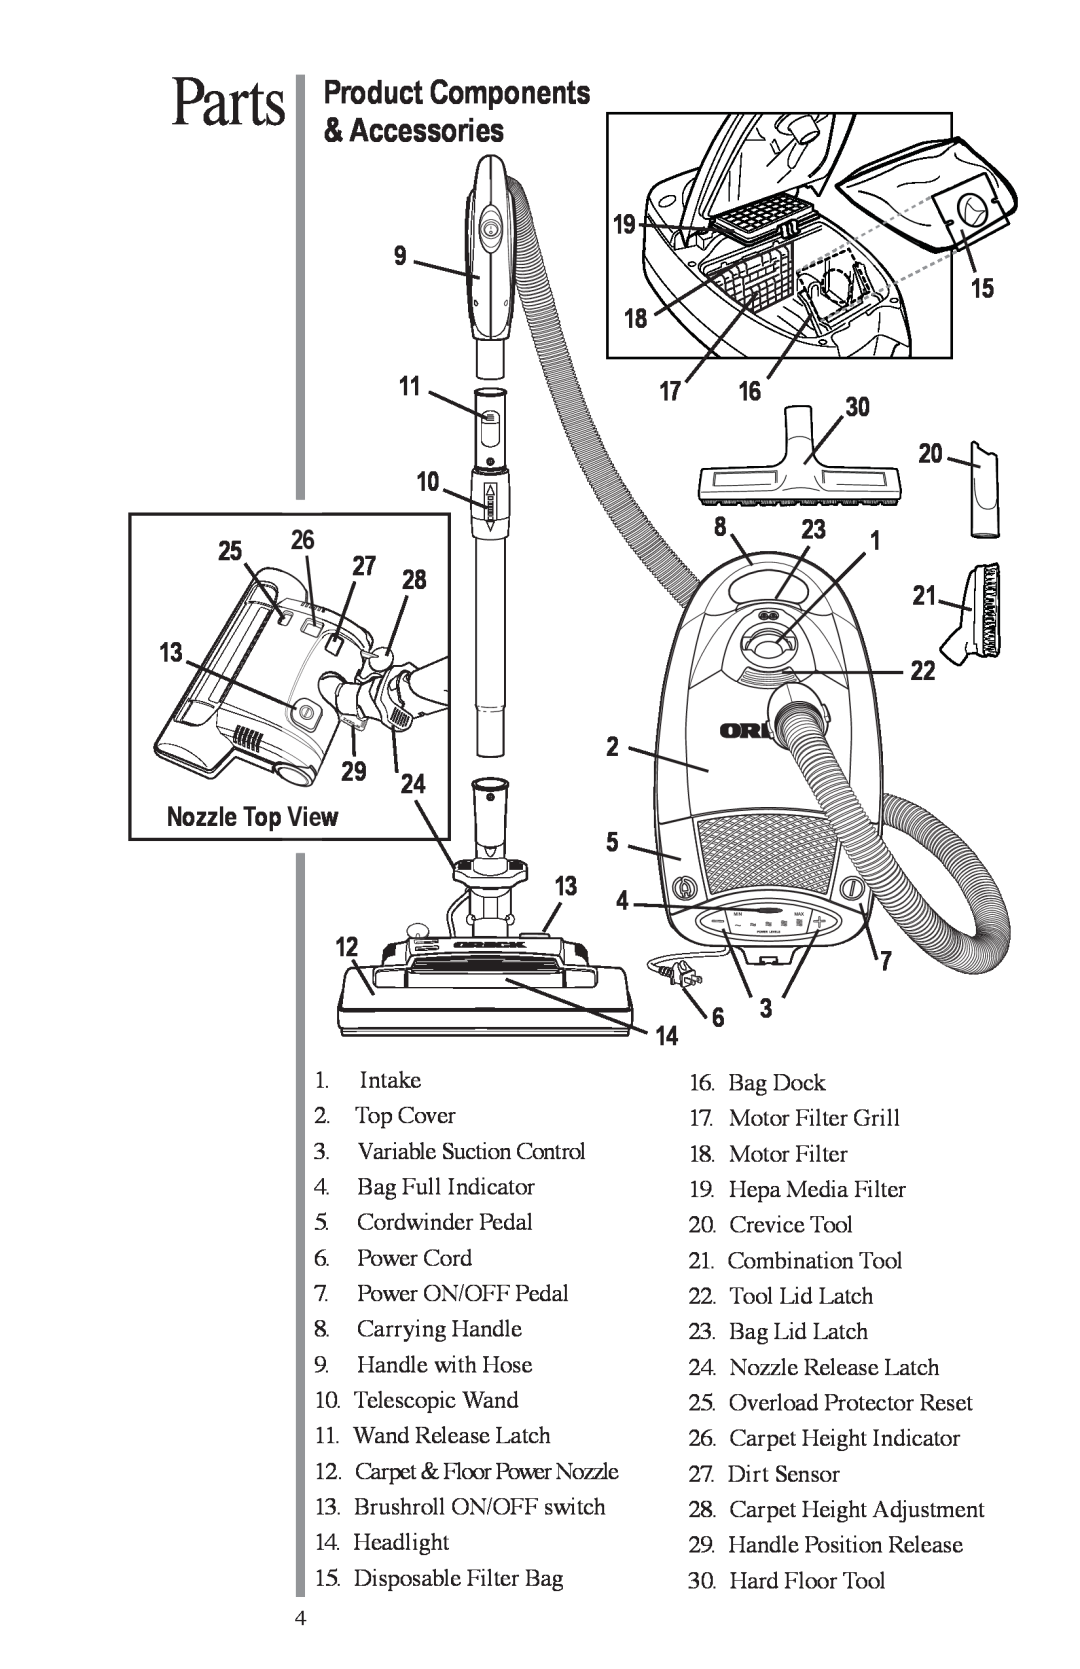 Oreck FC1000 manual Parts Product Components & Accessories, 9 11 10 25 26 27 13 29 Nozzle Top View, 19 15 